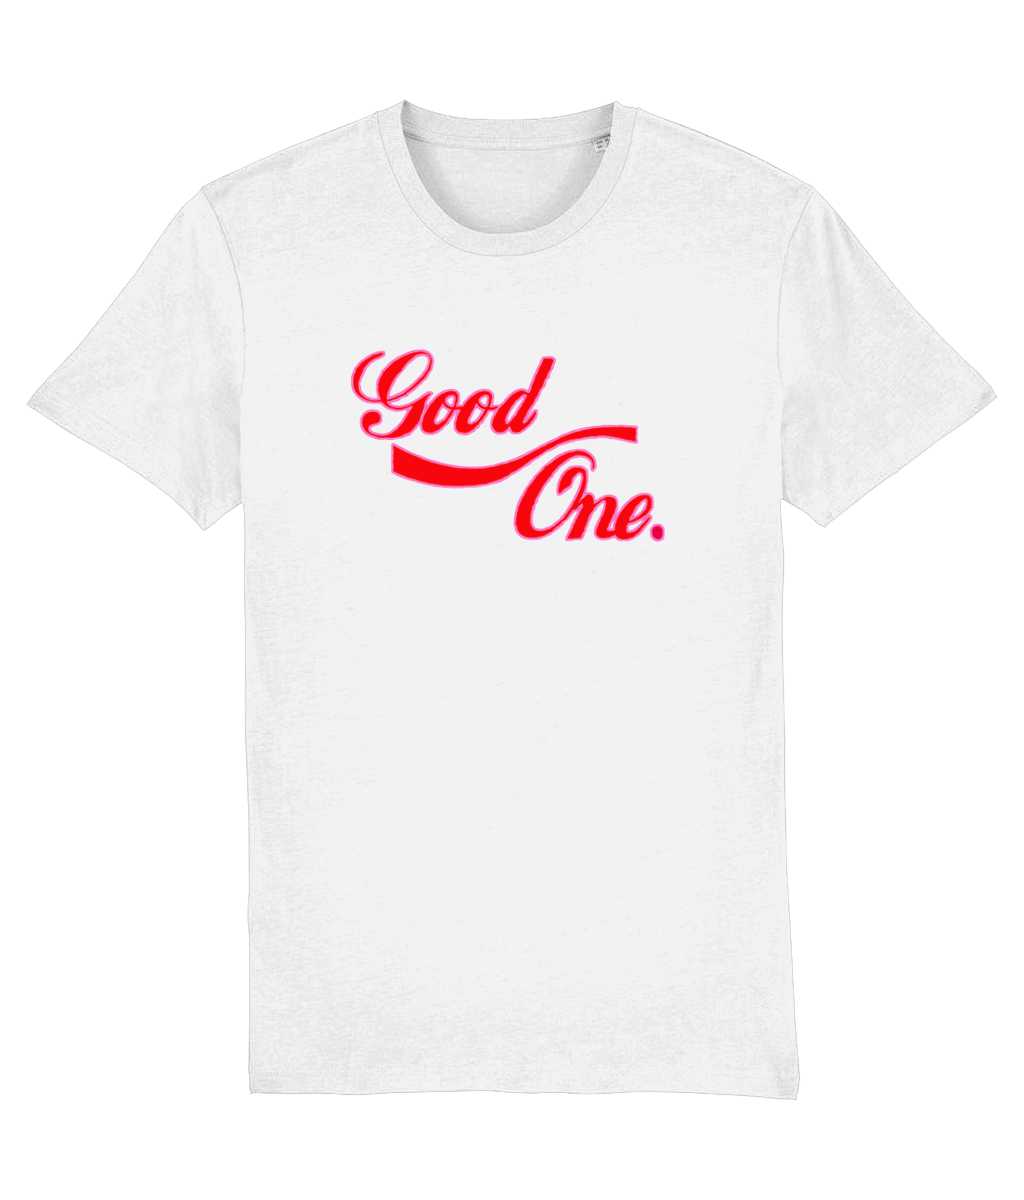 Good One Non Gender T Shirt Cherchez La Femme brand